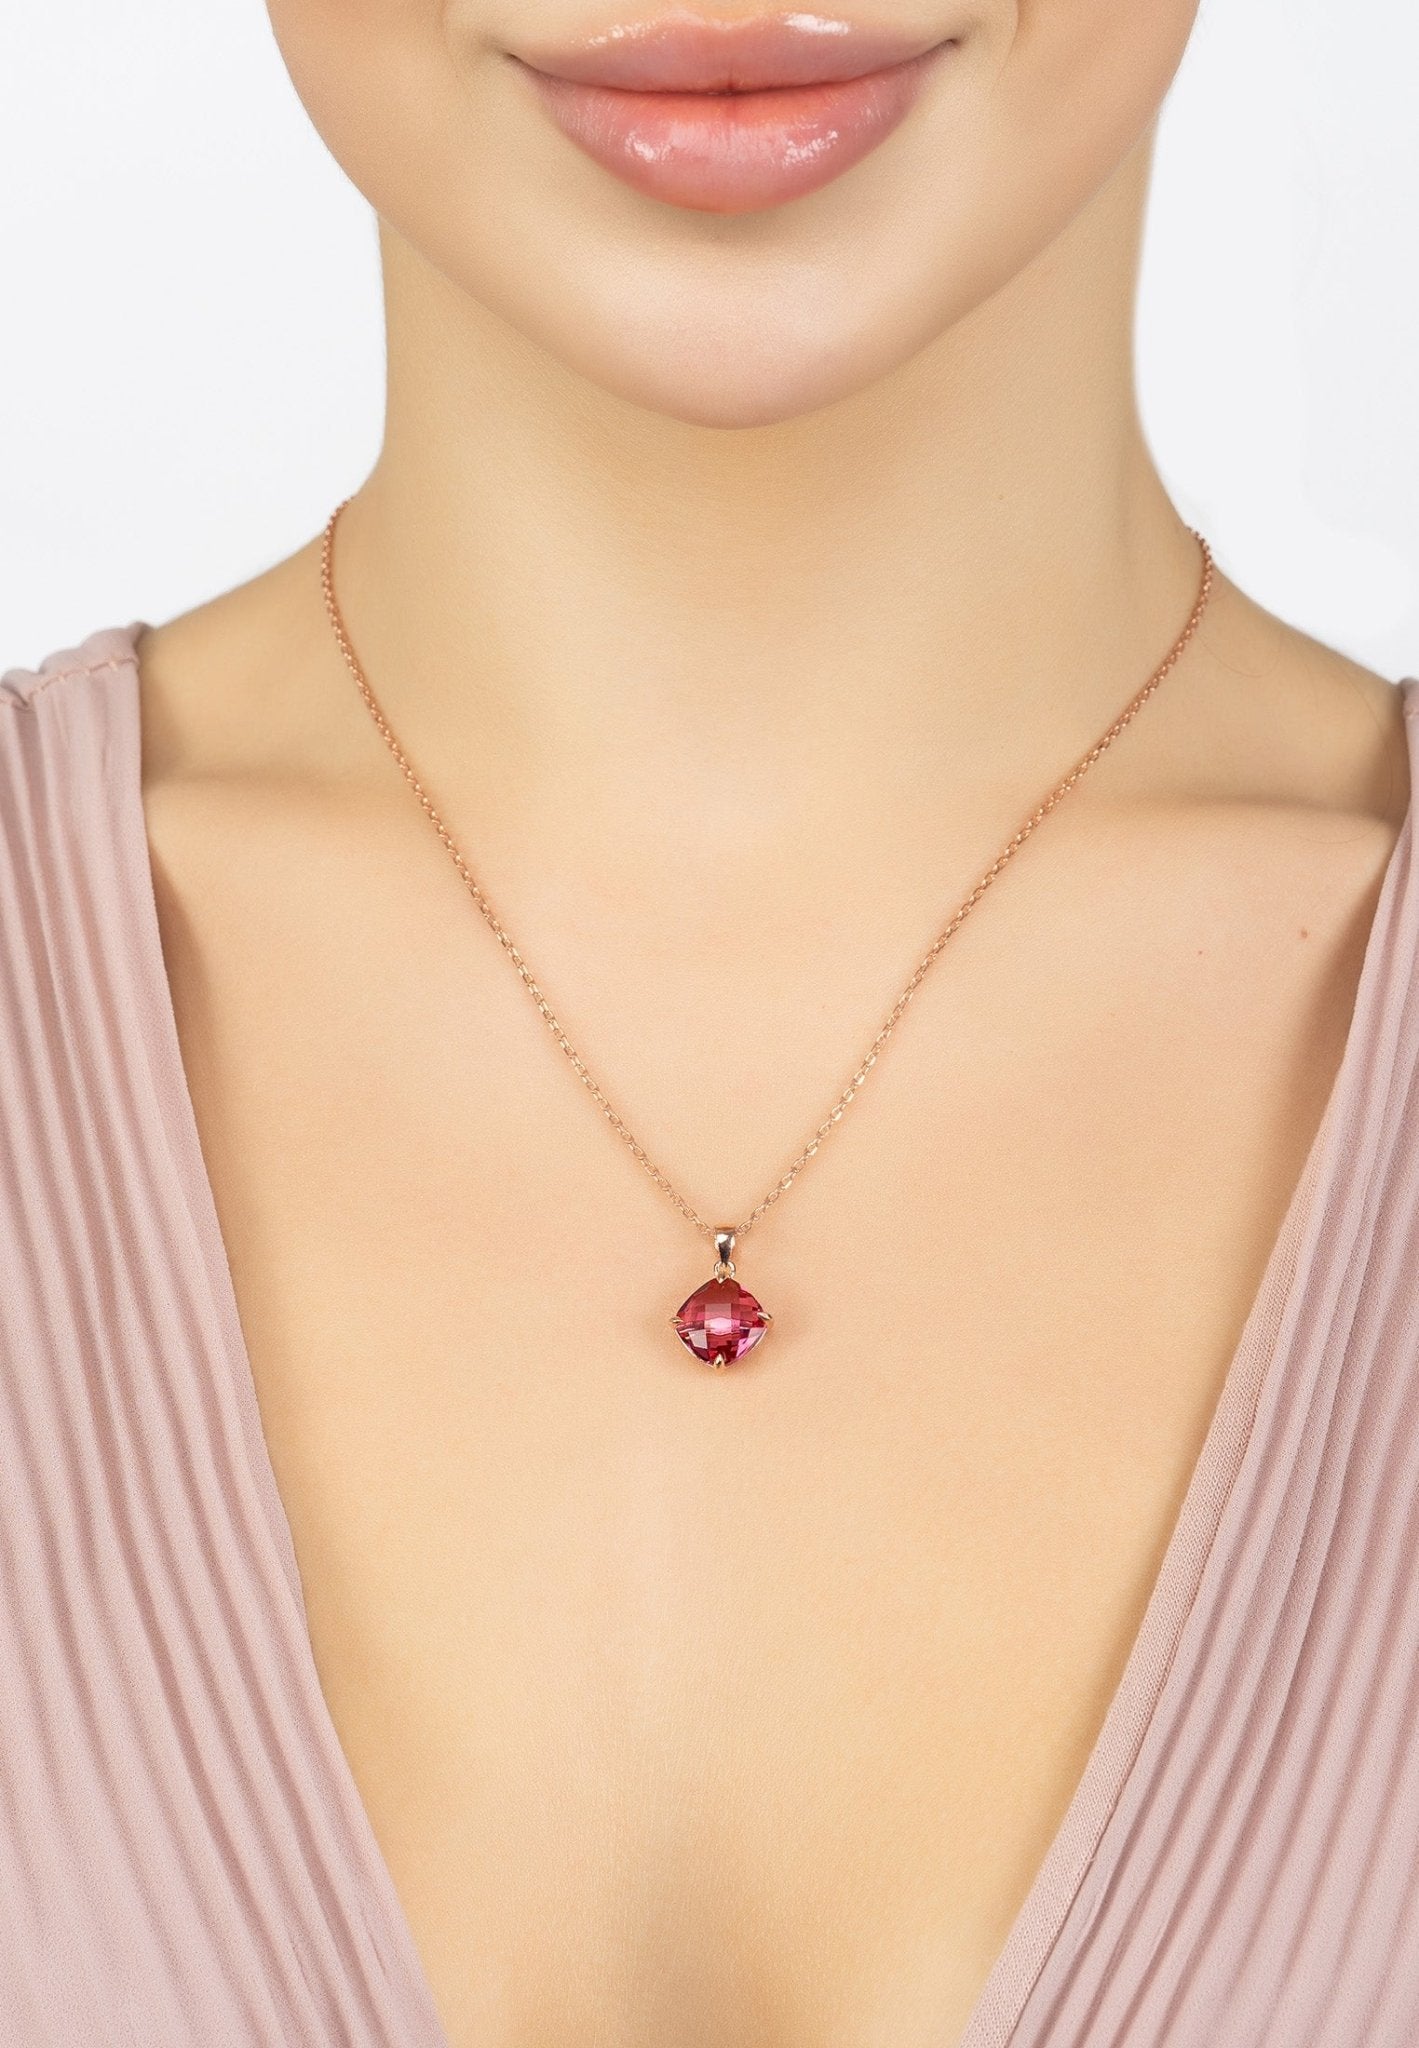 Empress Pink Tourmaline Gemstone Necklace Rosegold - LATELITA Necklaces